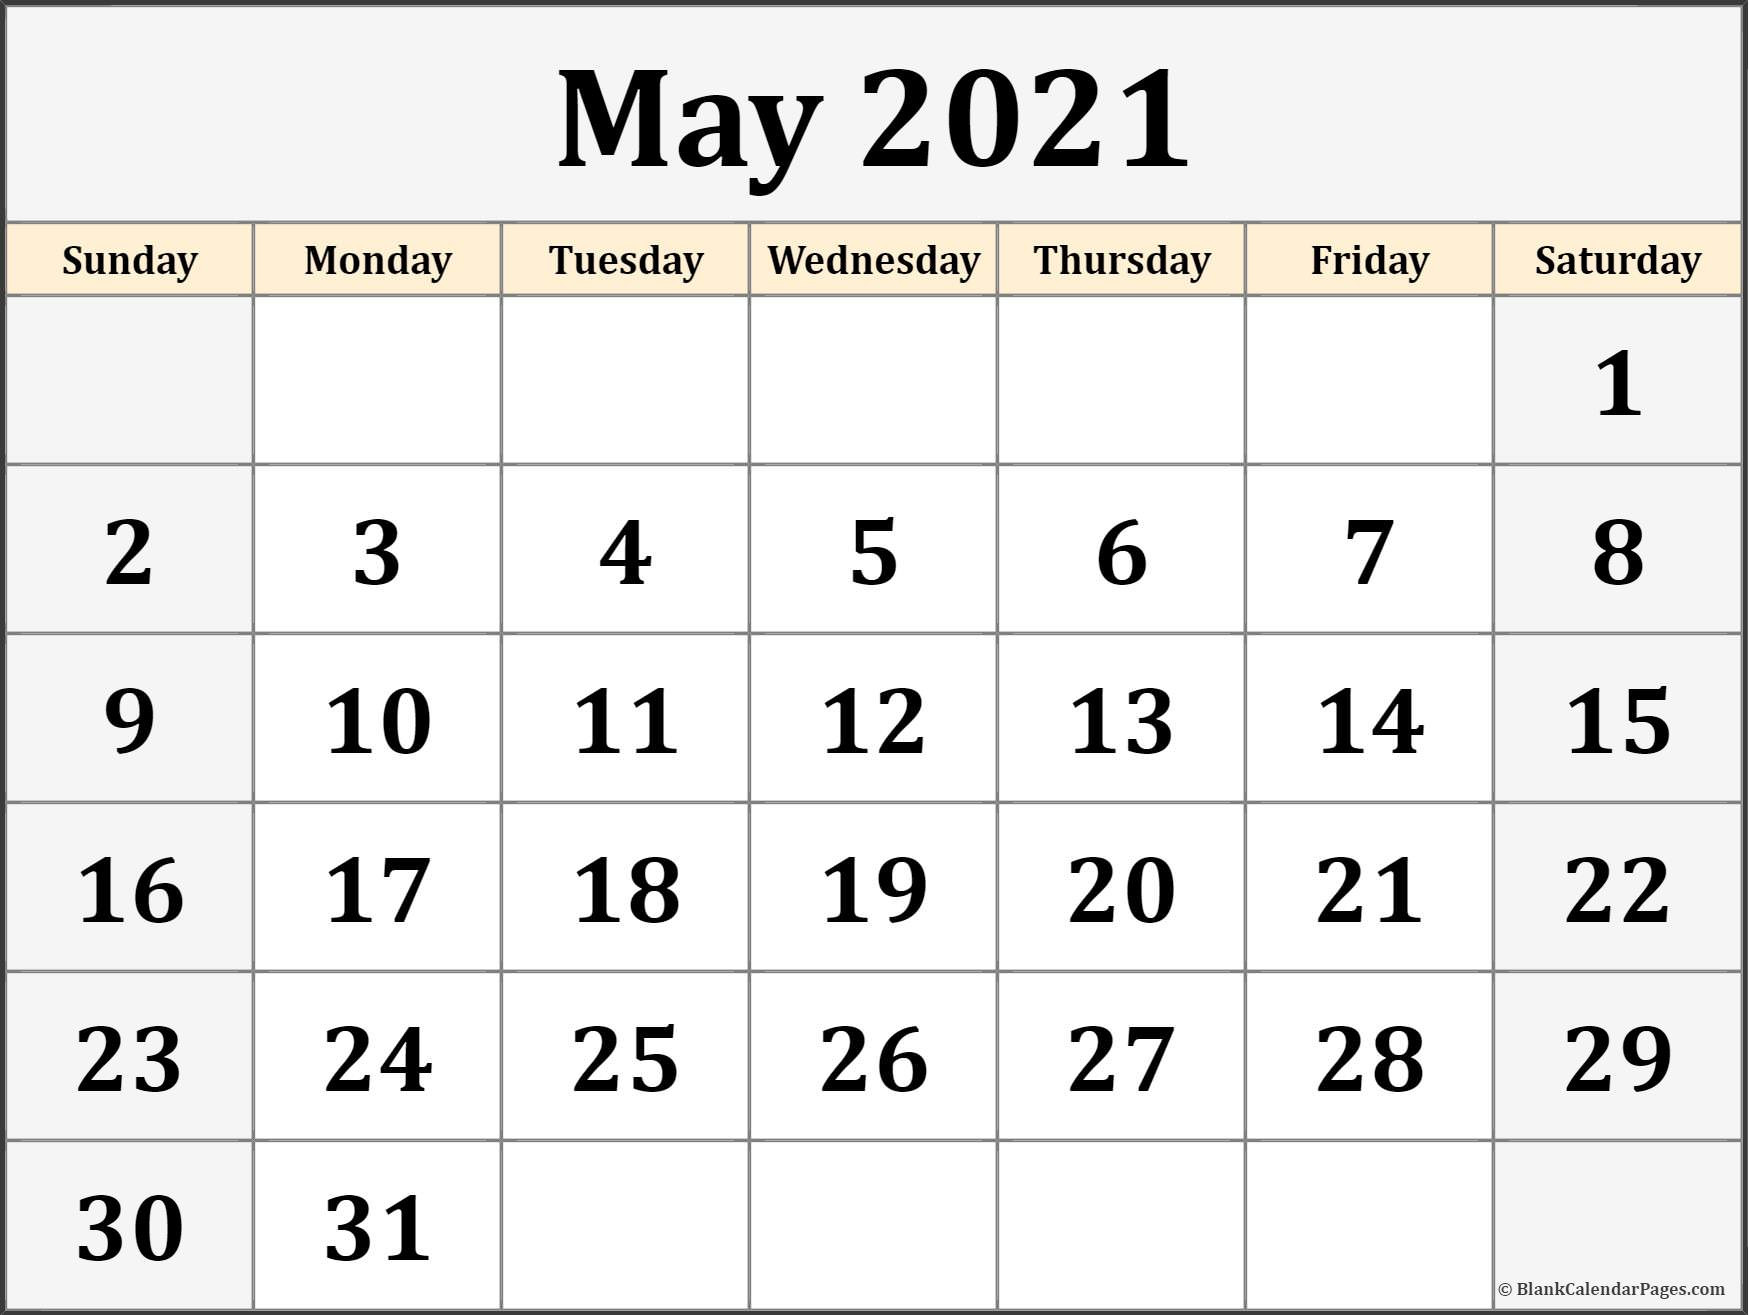 May 2021 Blank Calendar Templates.-Free Blank Printable Monthly Calendar 2021